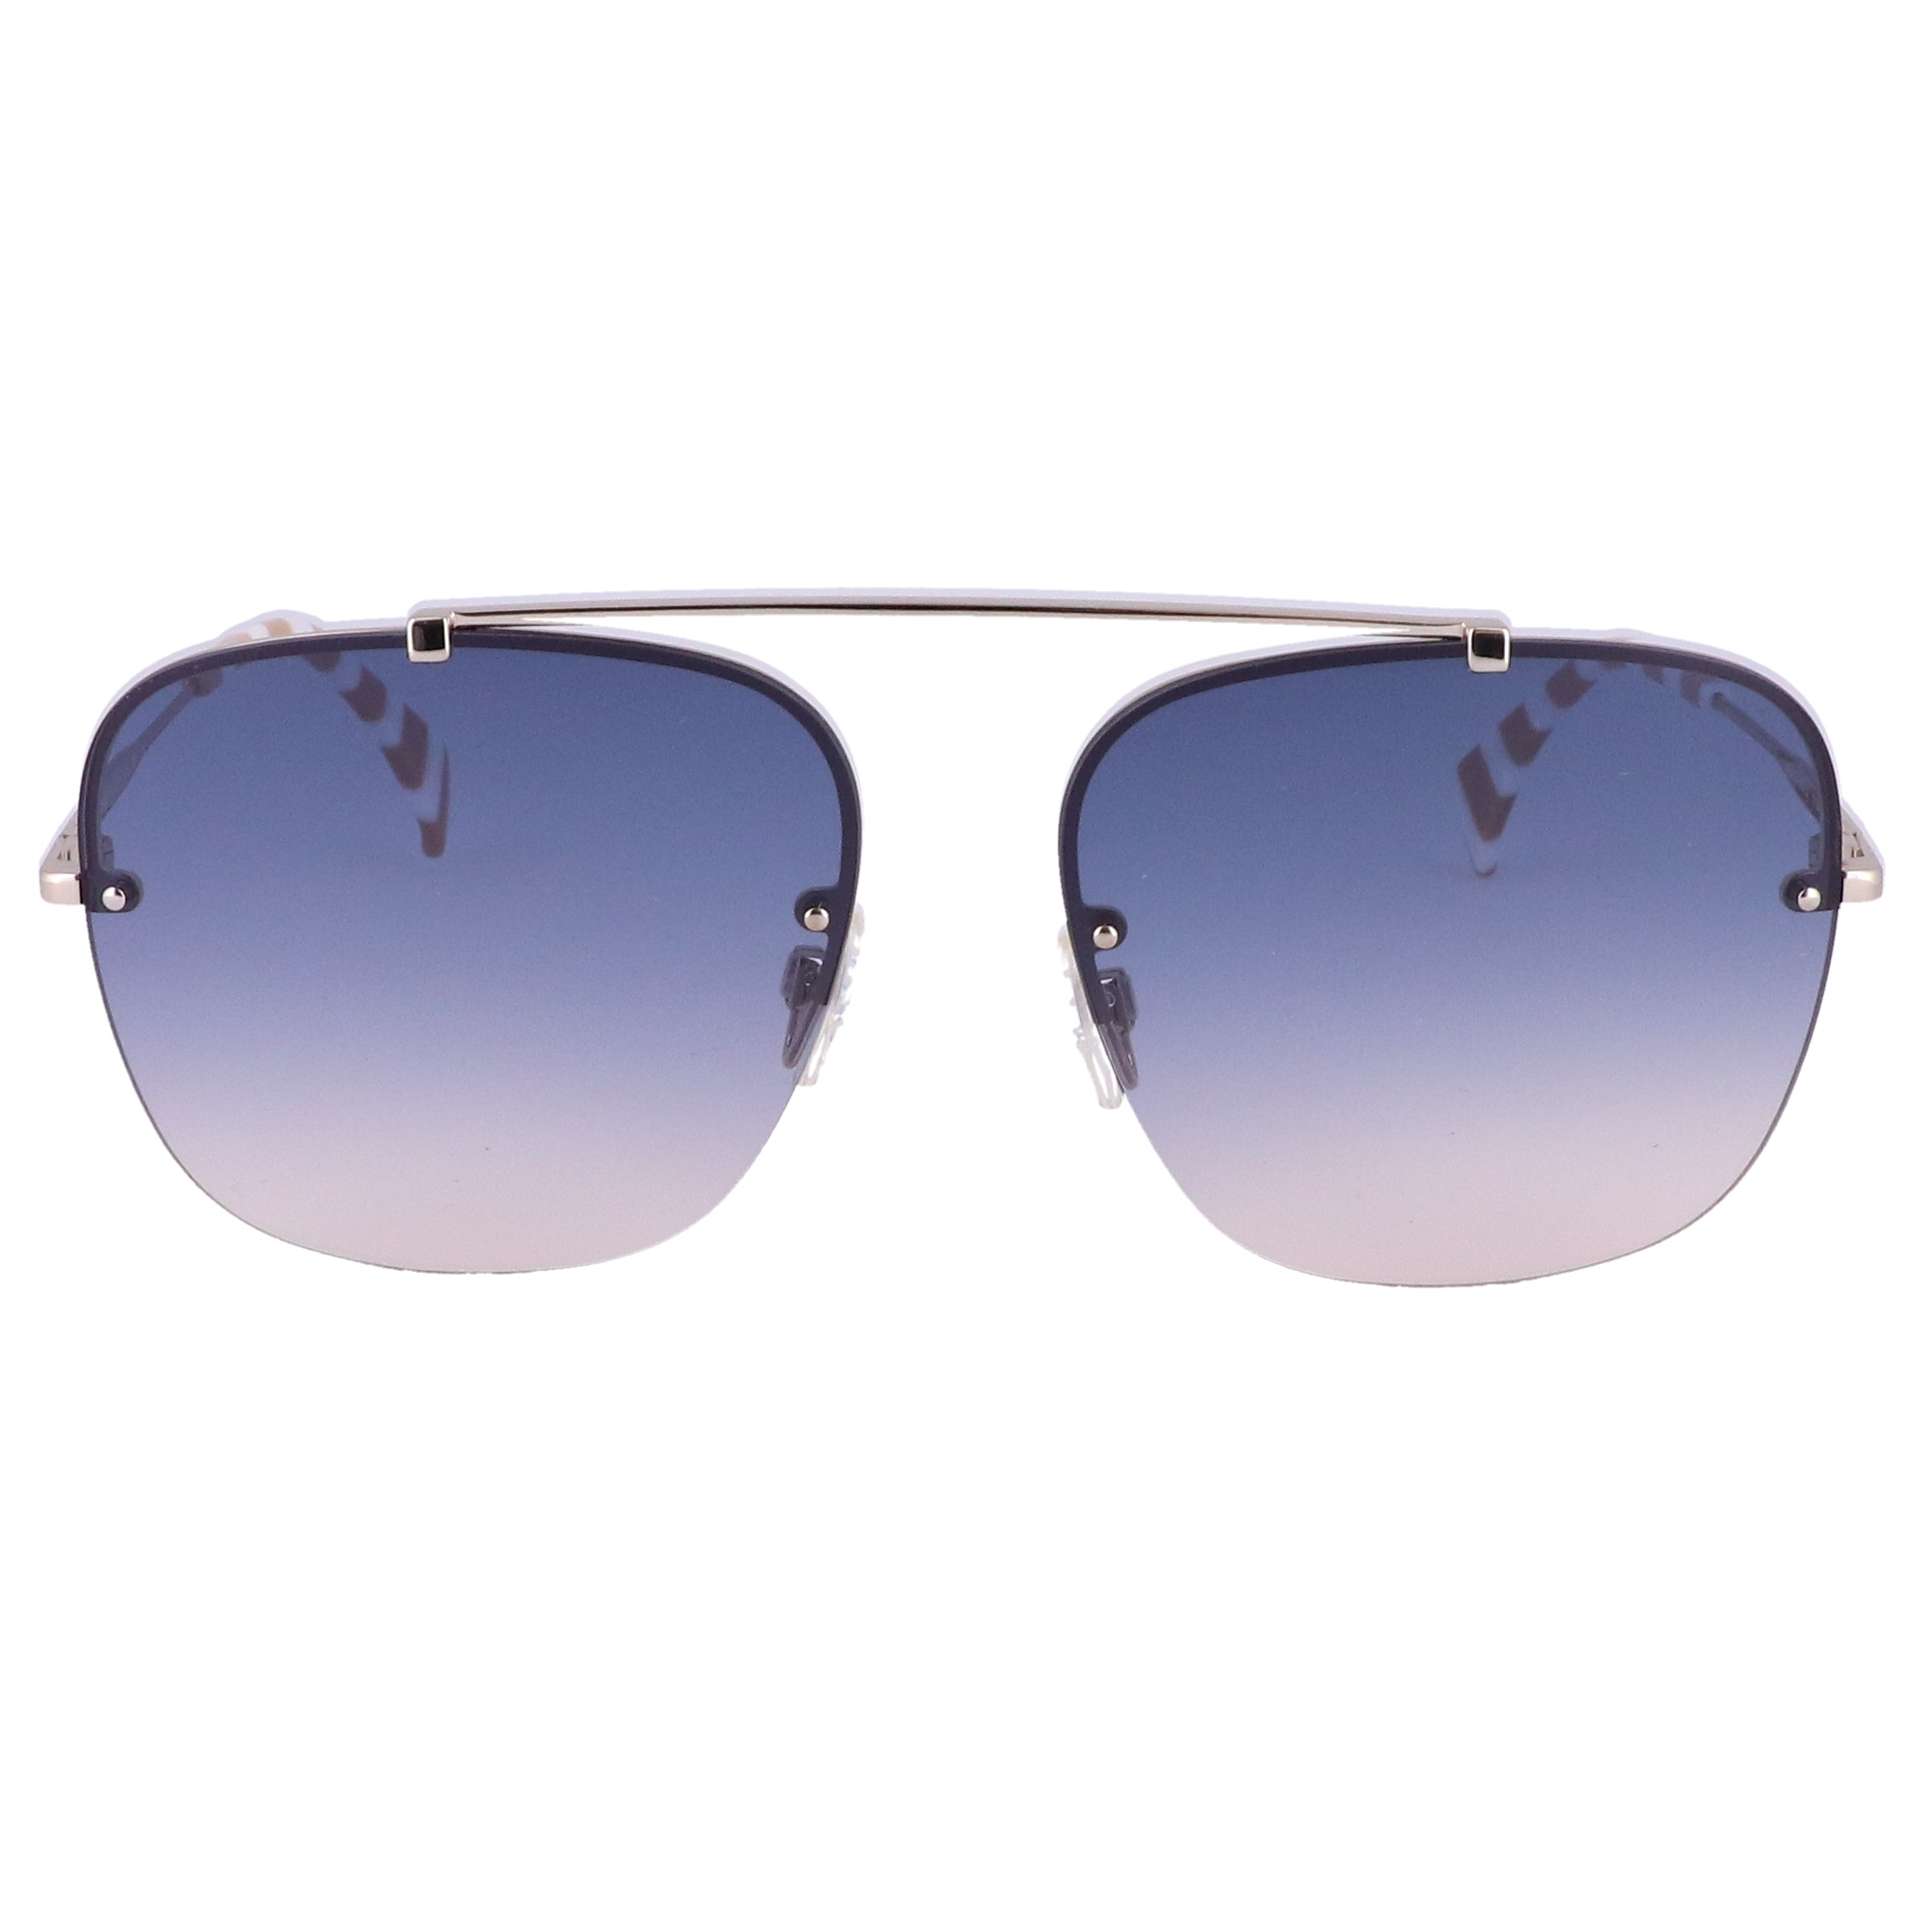 Sunglasses Tommy Hilfiger Th Gigi Hadid 2 03YG Lgh Gold / I4 Blue Gradient Lens - image 2 of 4